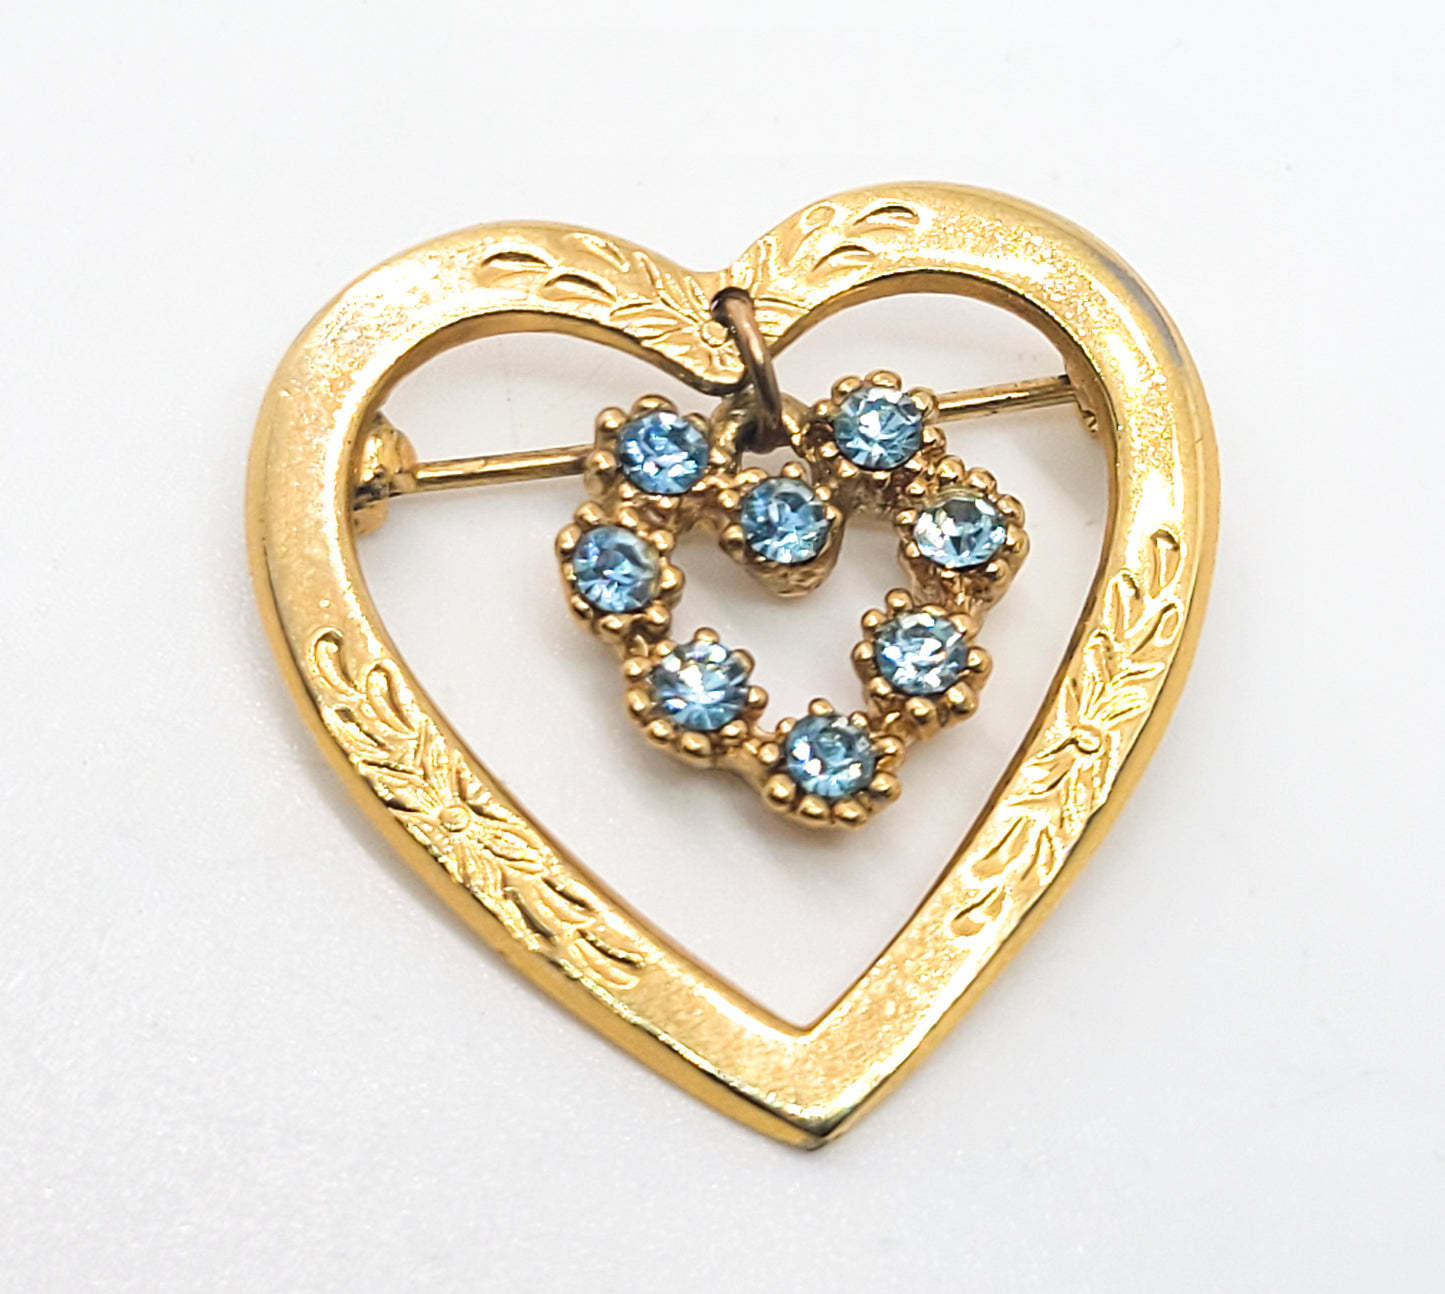 Aqua blue rhinstone gold toned etched heart charm vintage brooch